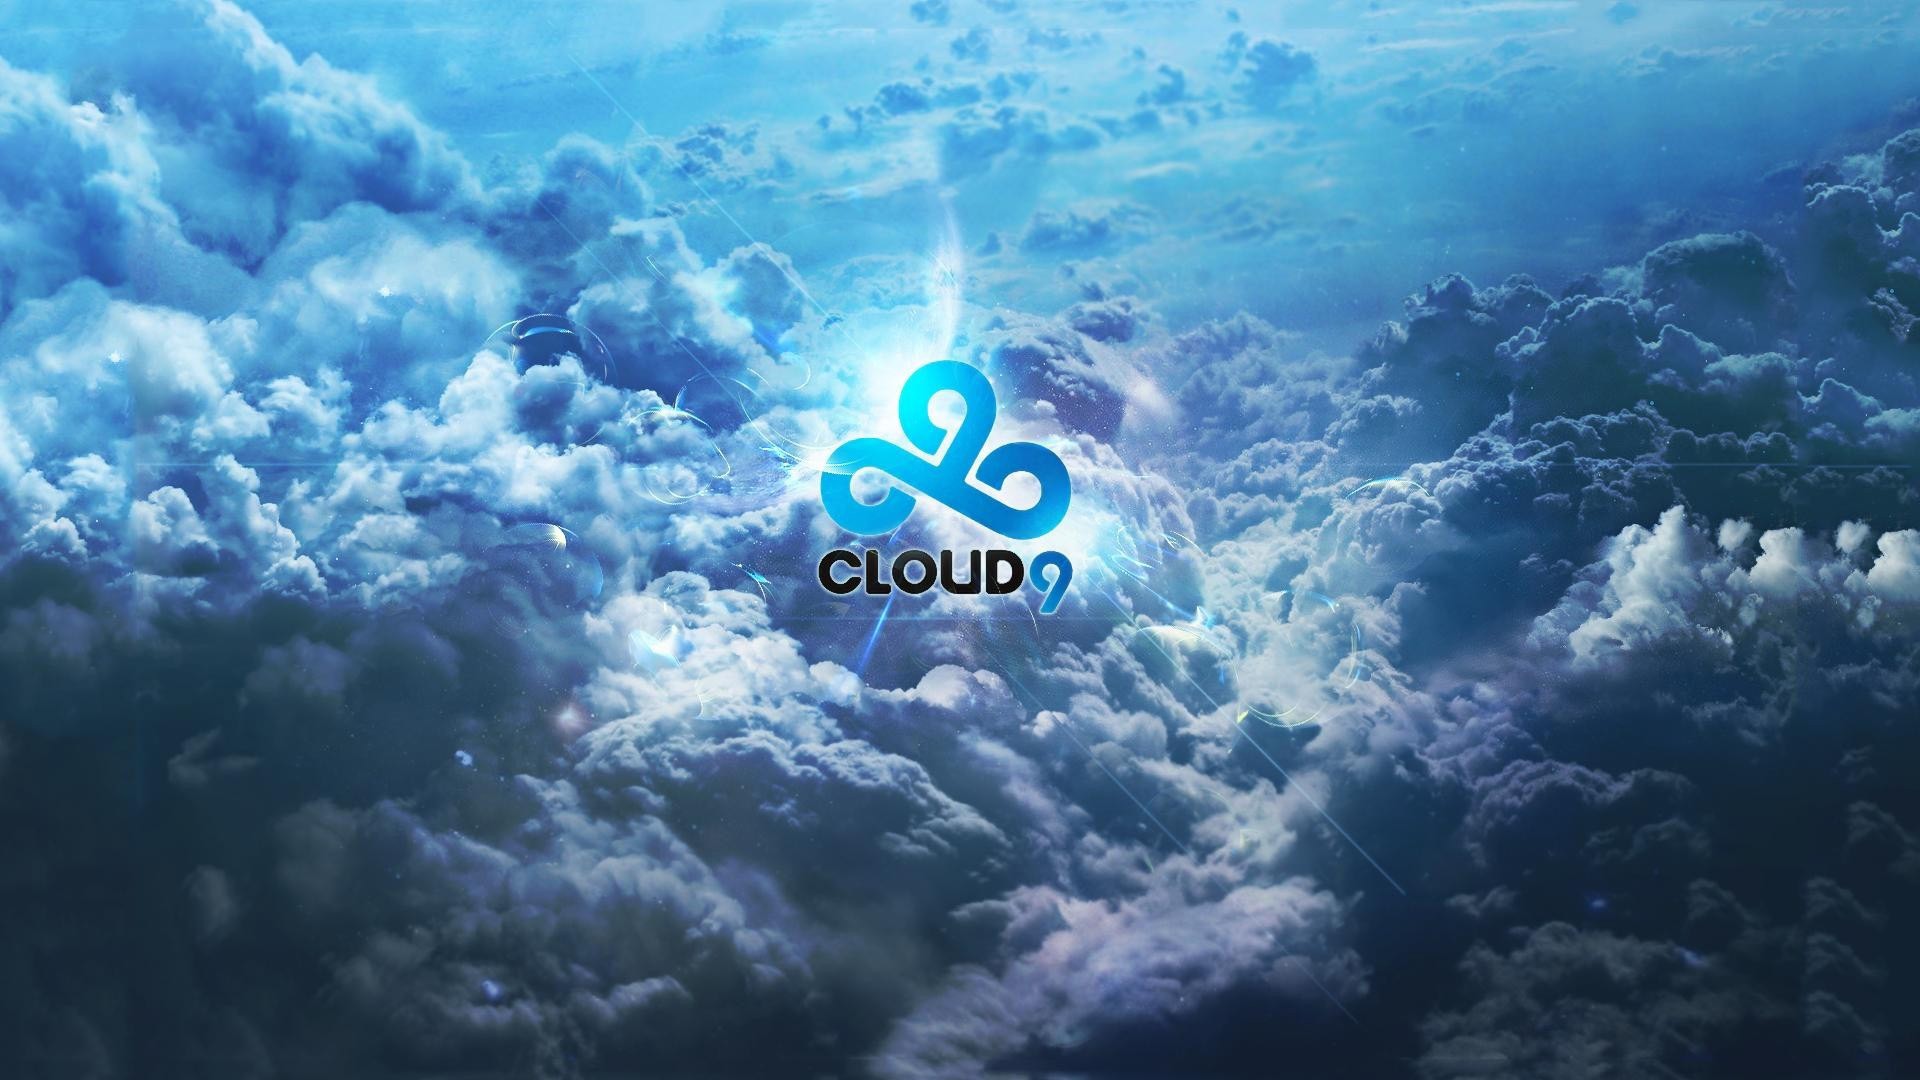 Cloud9 Wallpaper HD 1920x1080